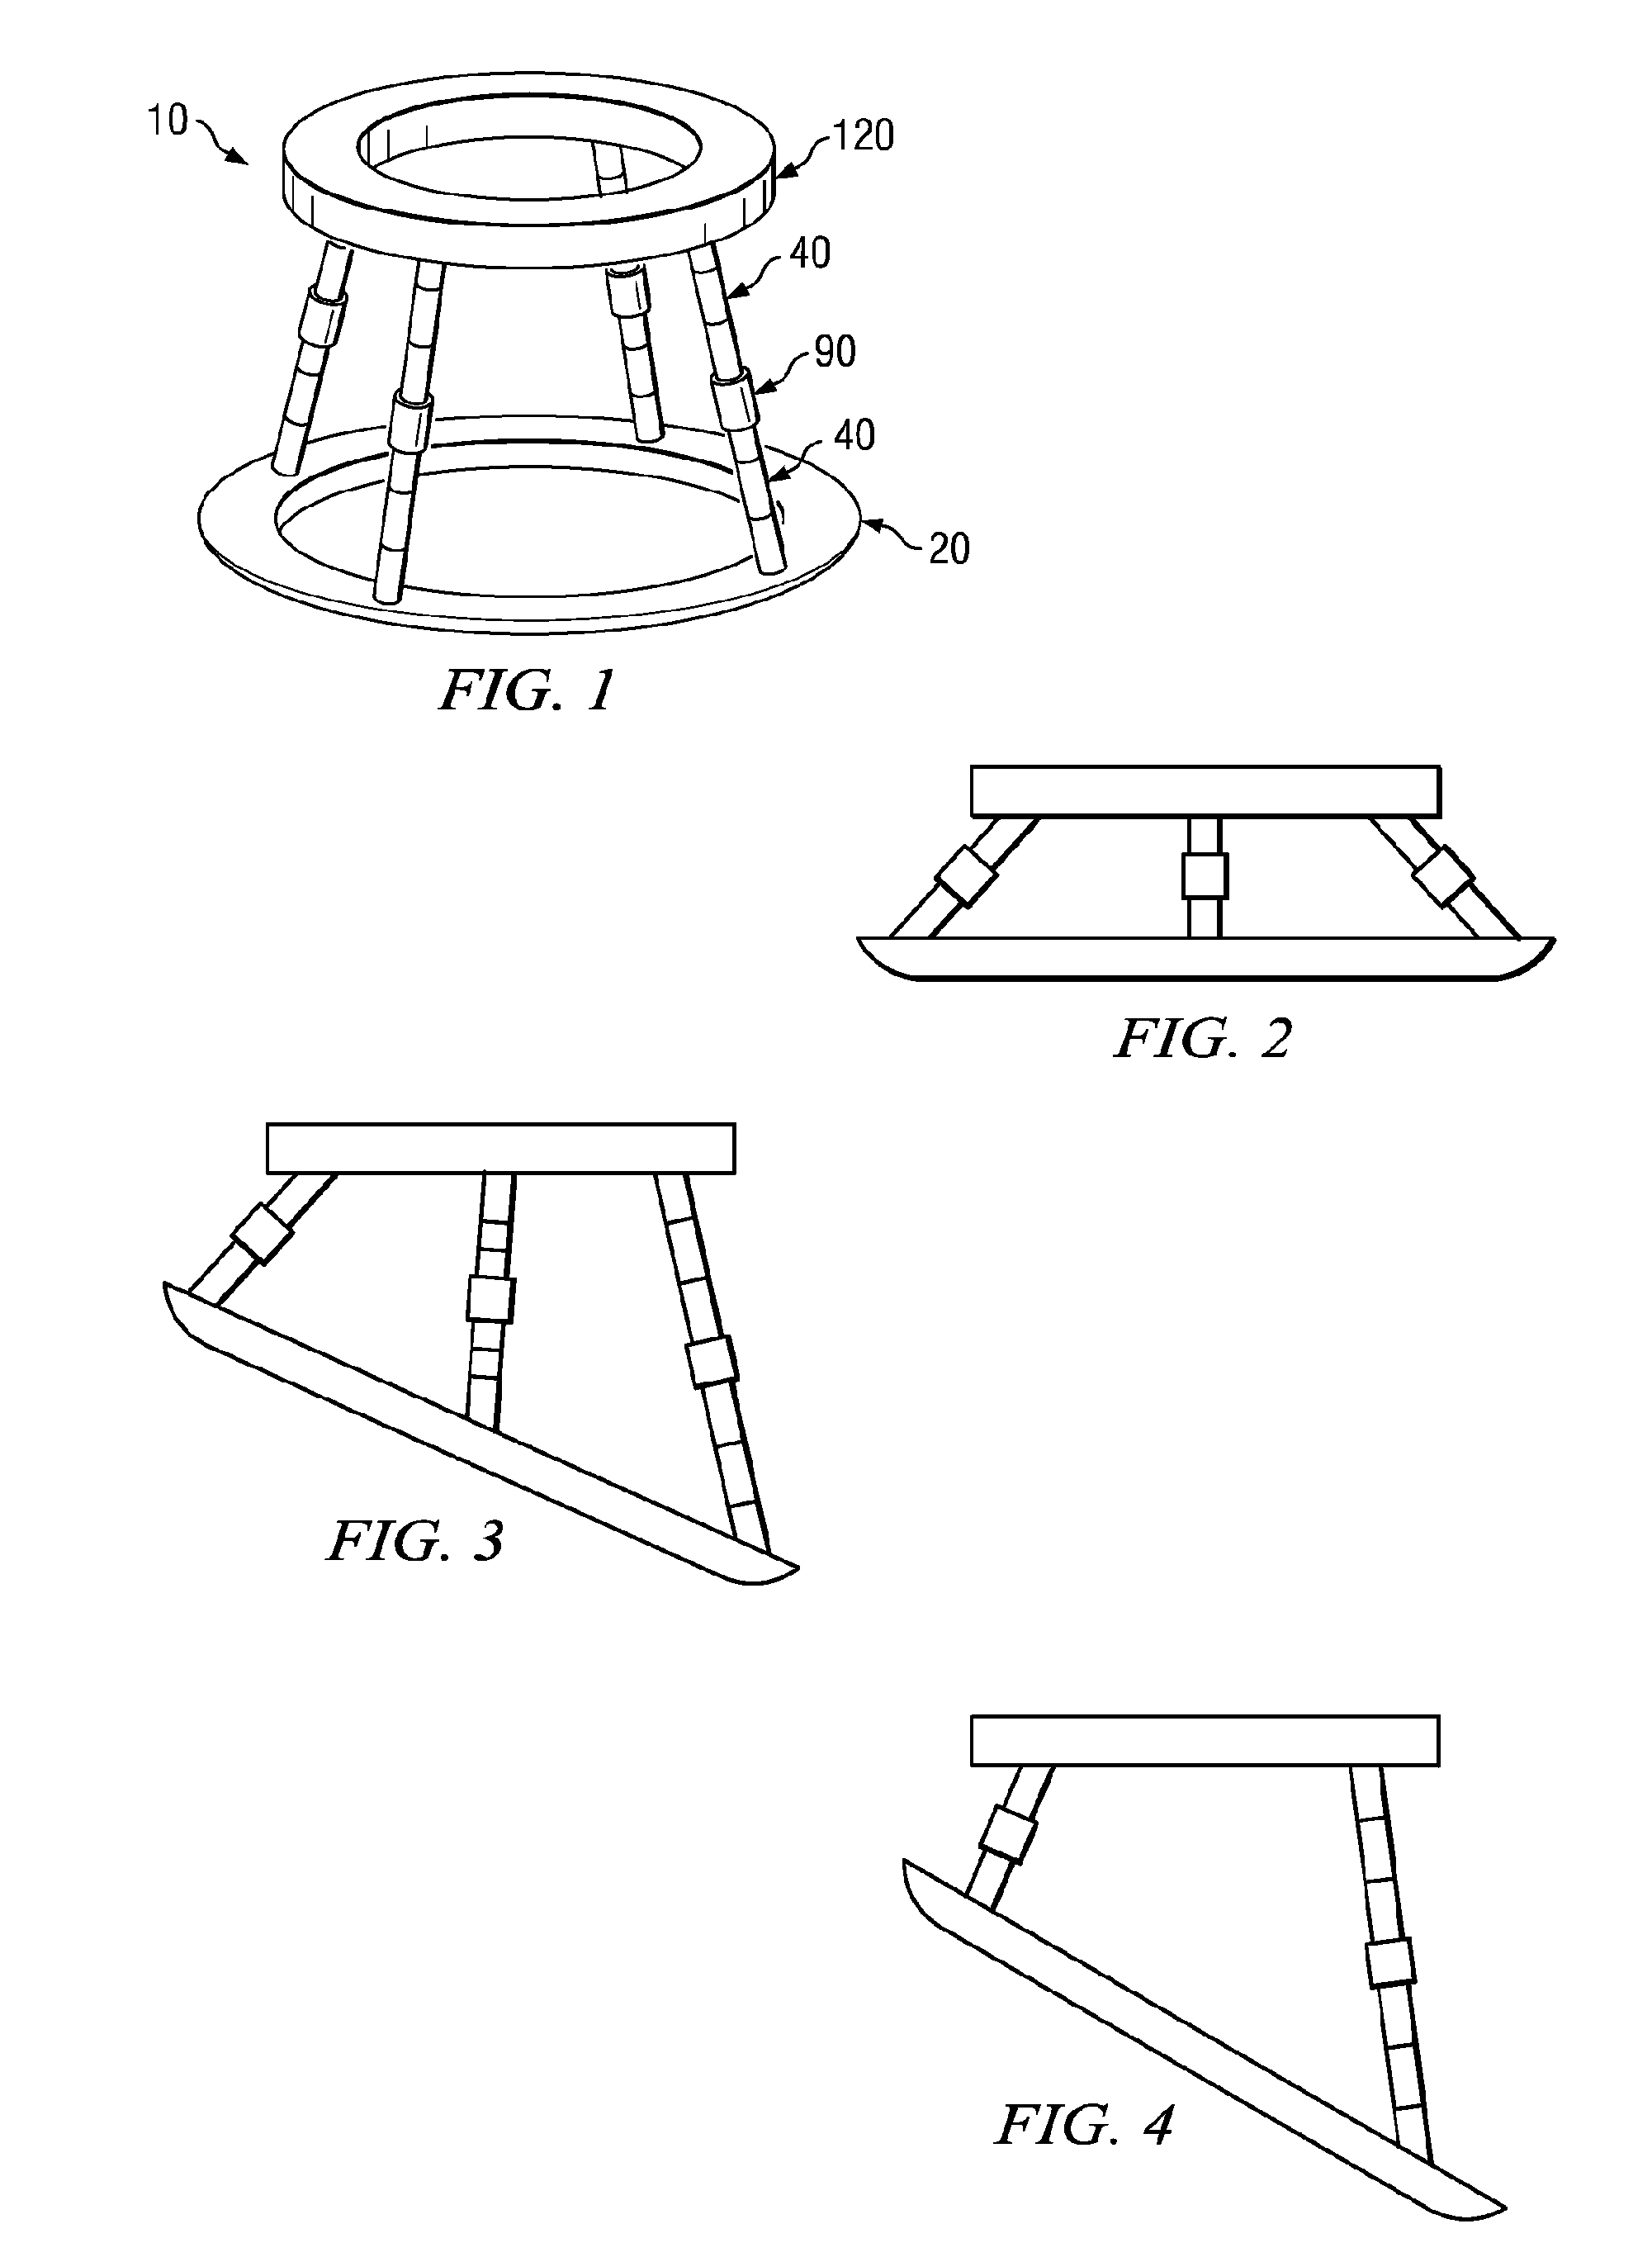 Variable surface landing platform (varslap)